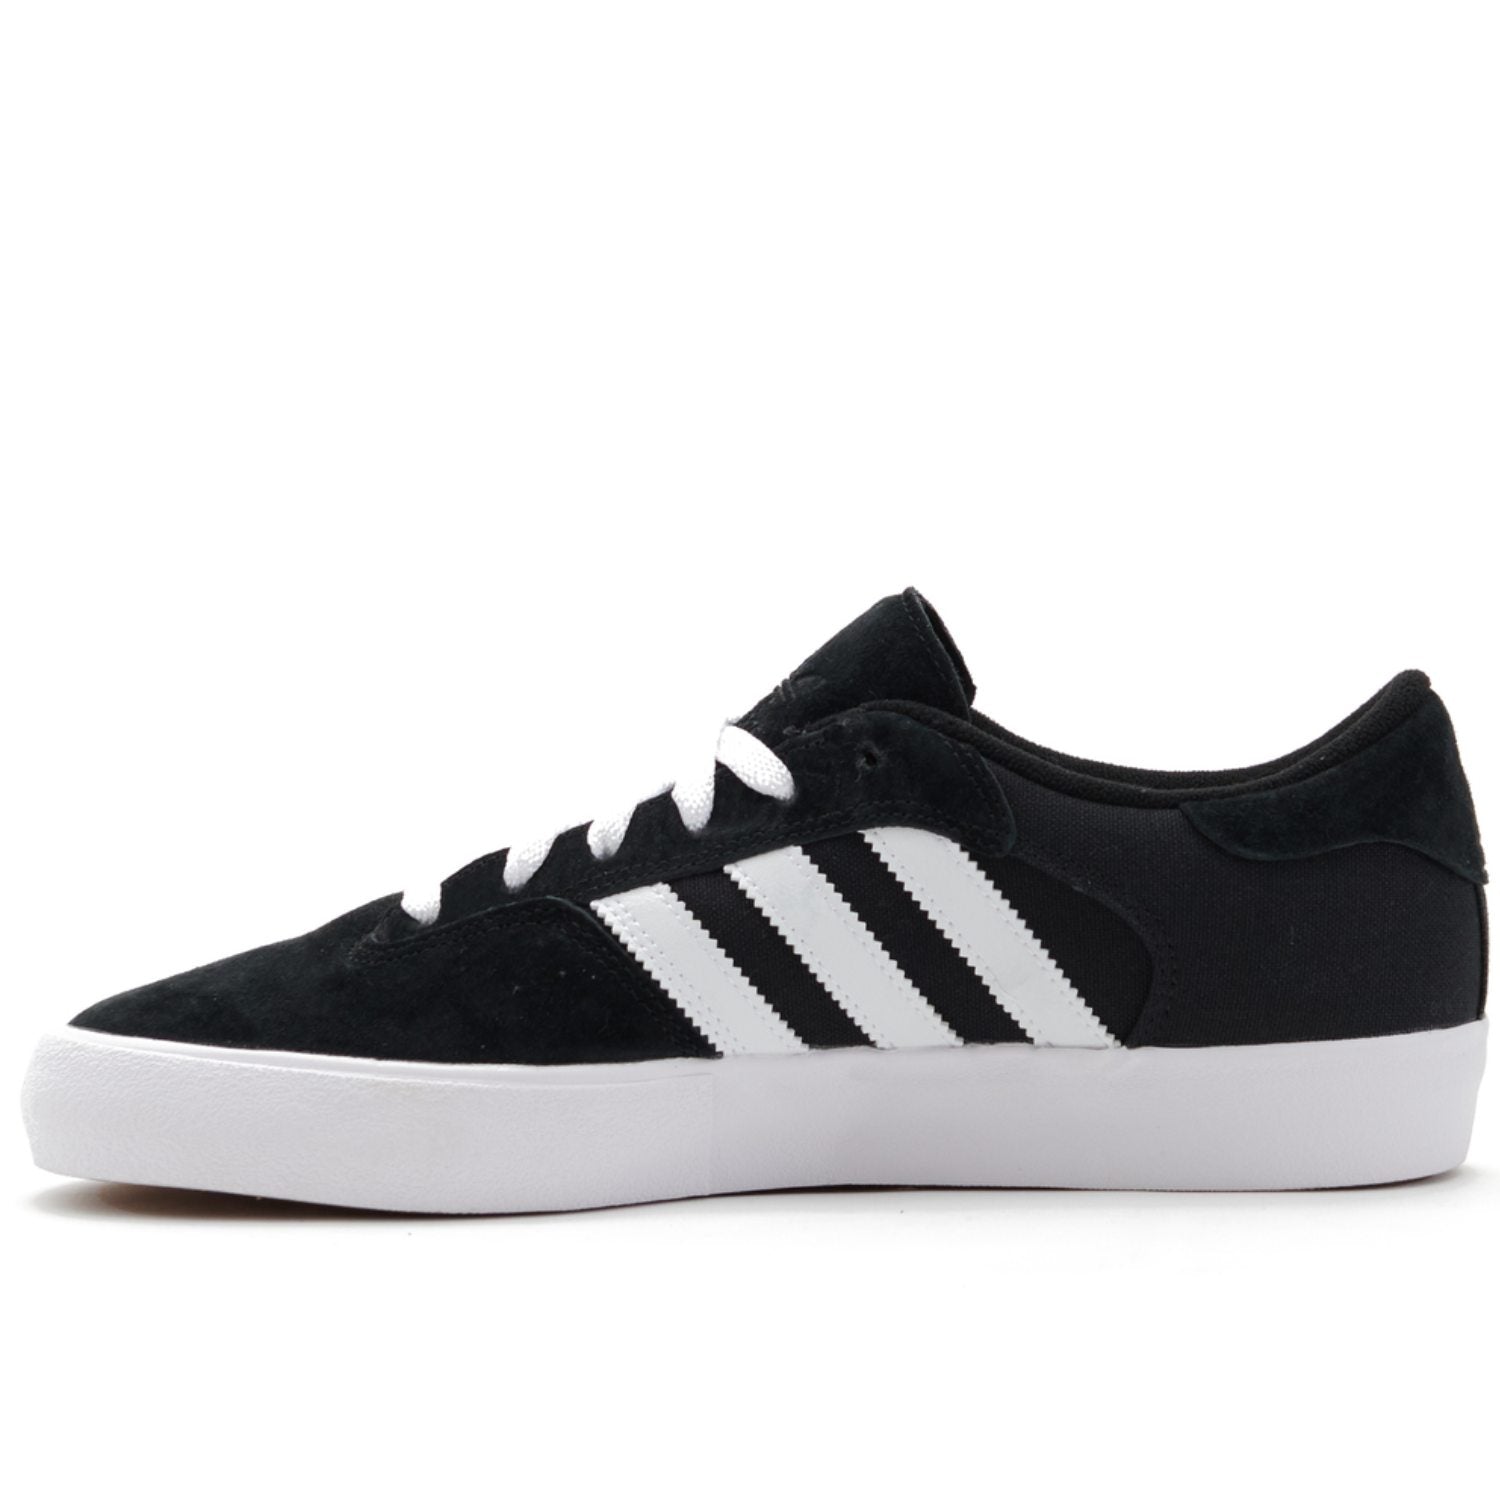 Adidas - Matchbreak Super Shoes - Black/White